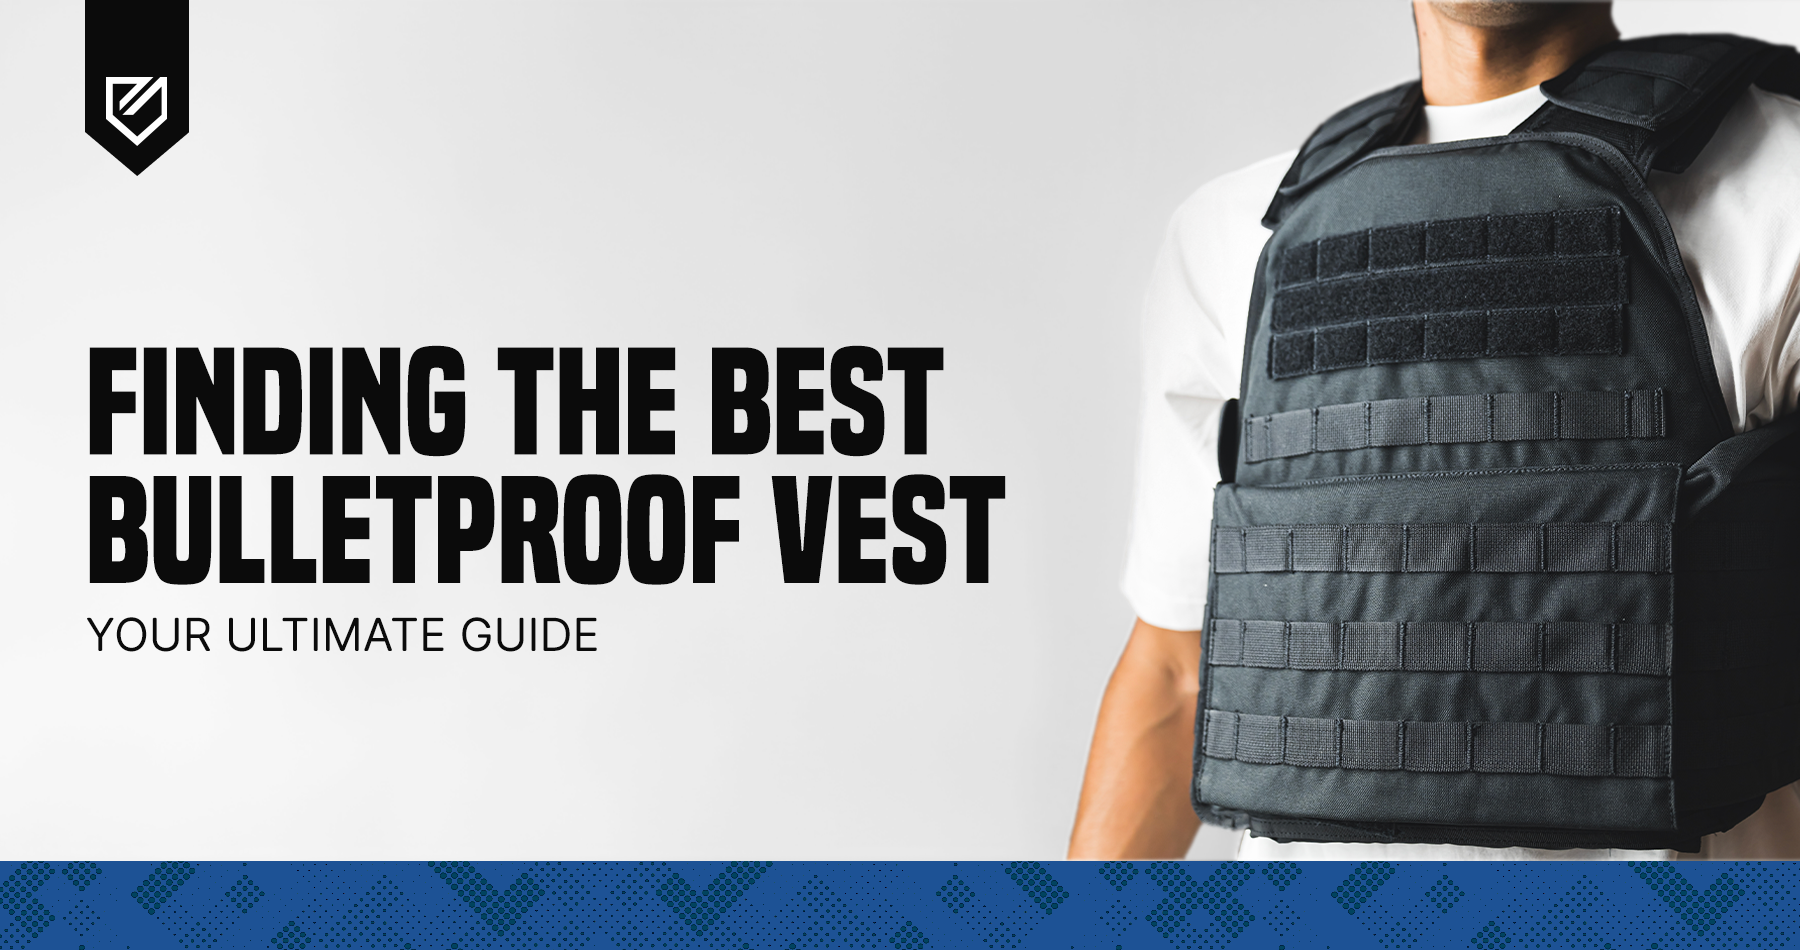 How to Find the Best Bulletproof Vest